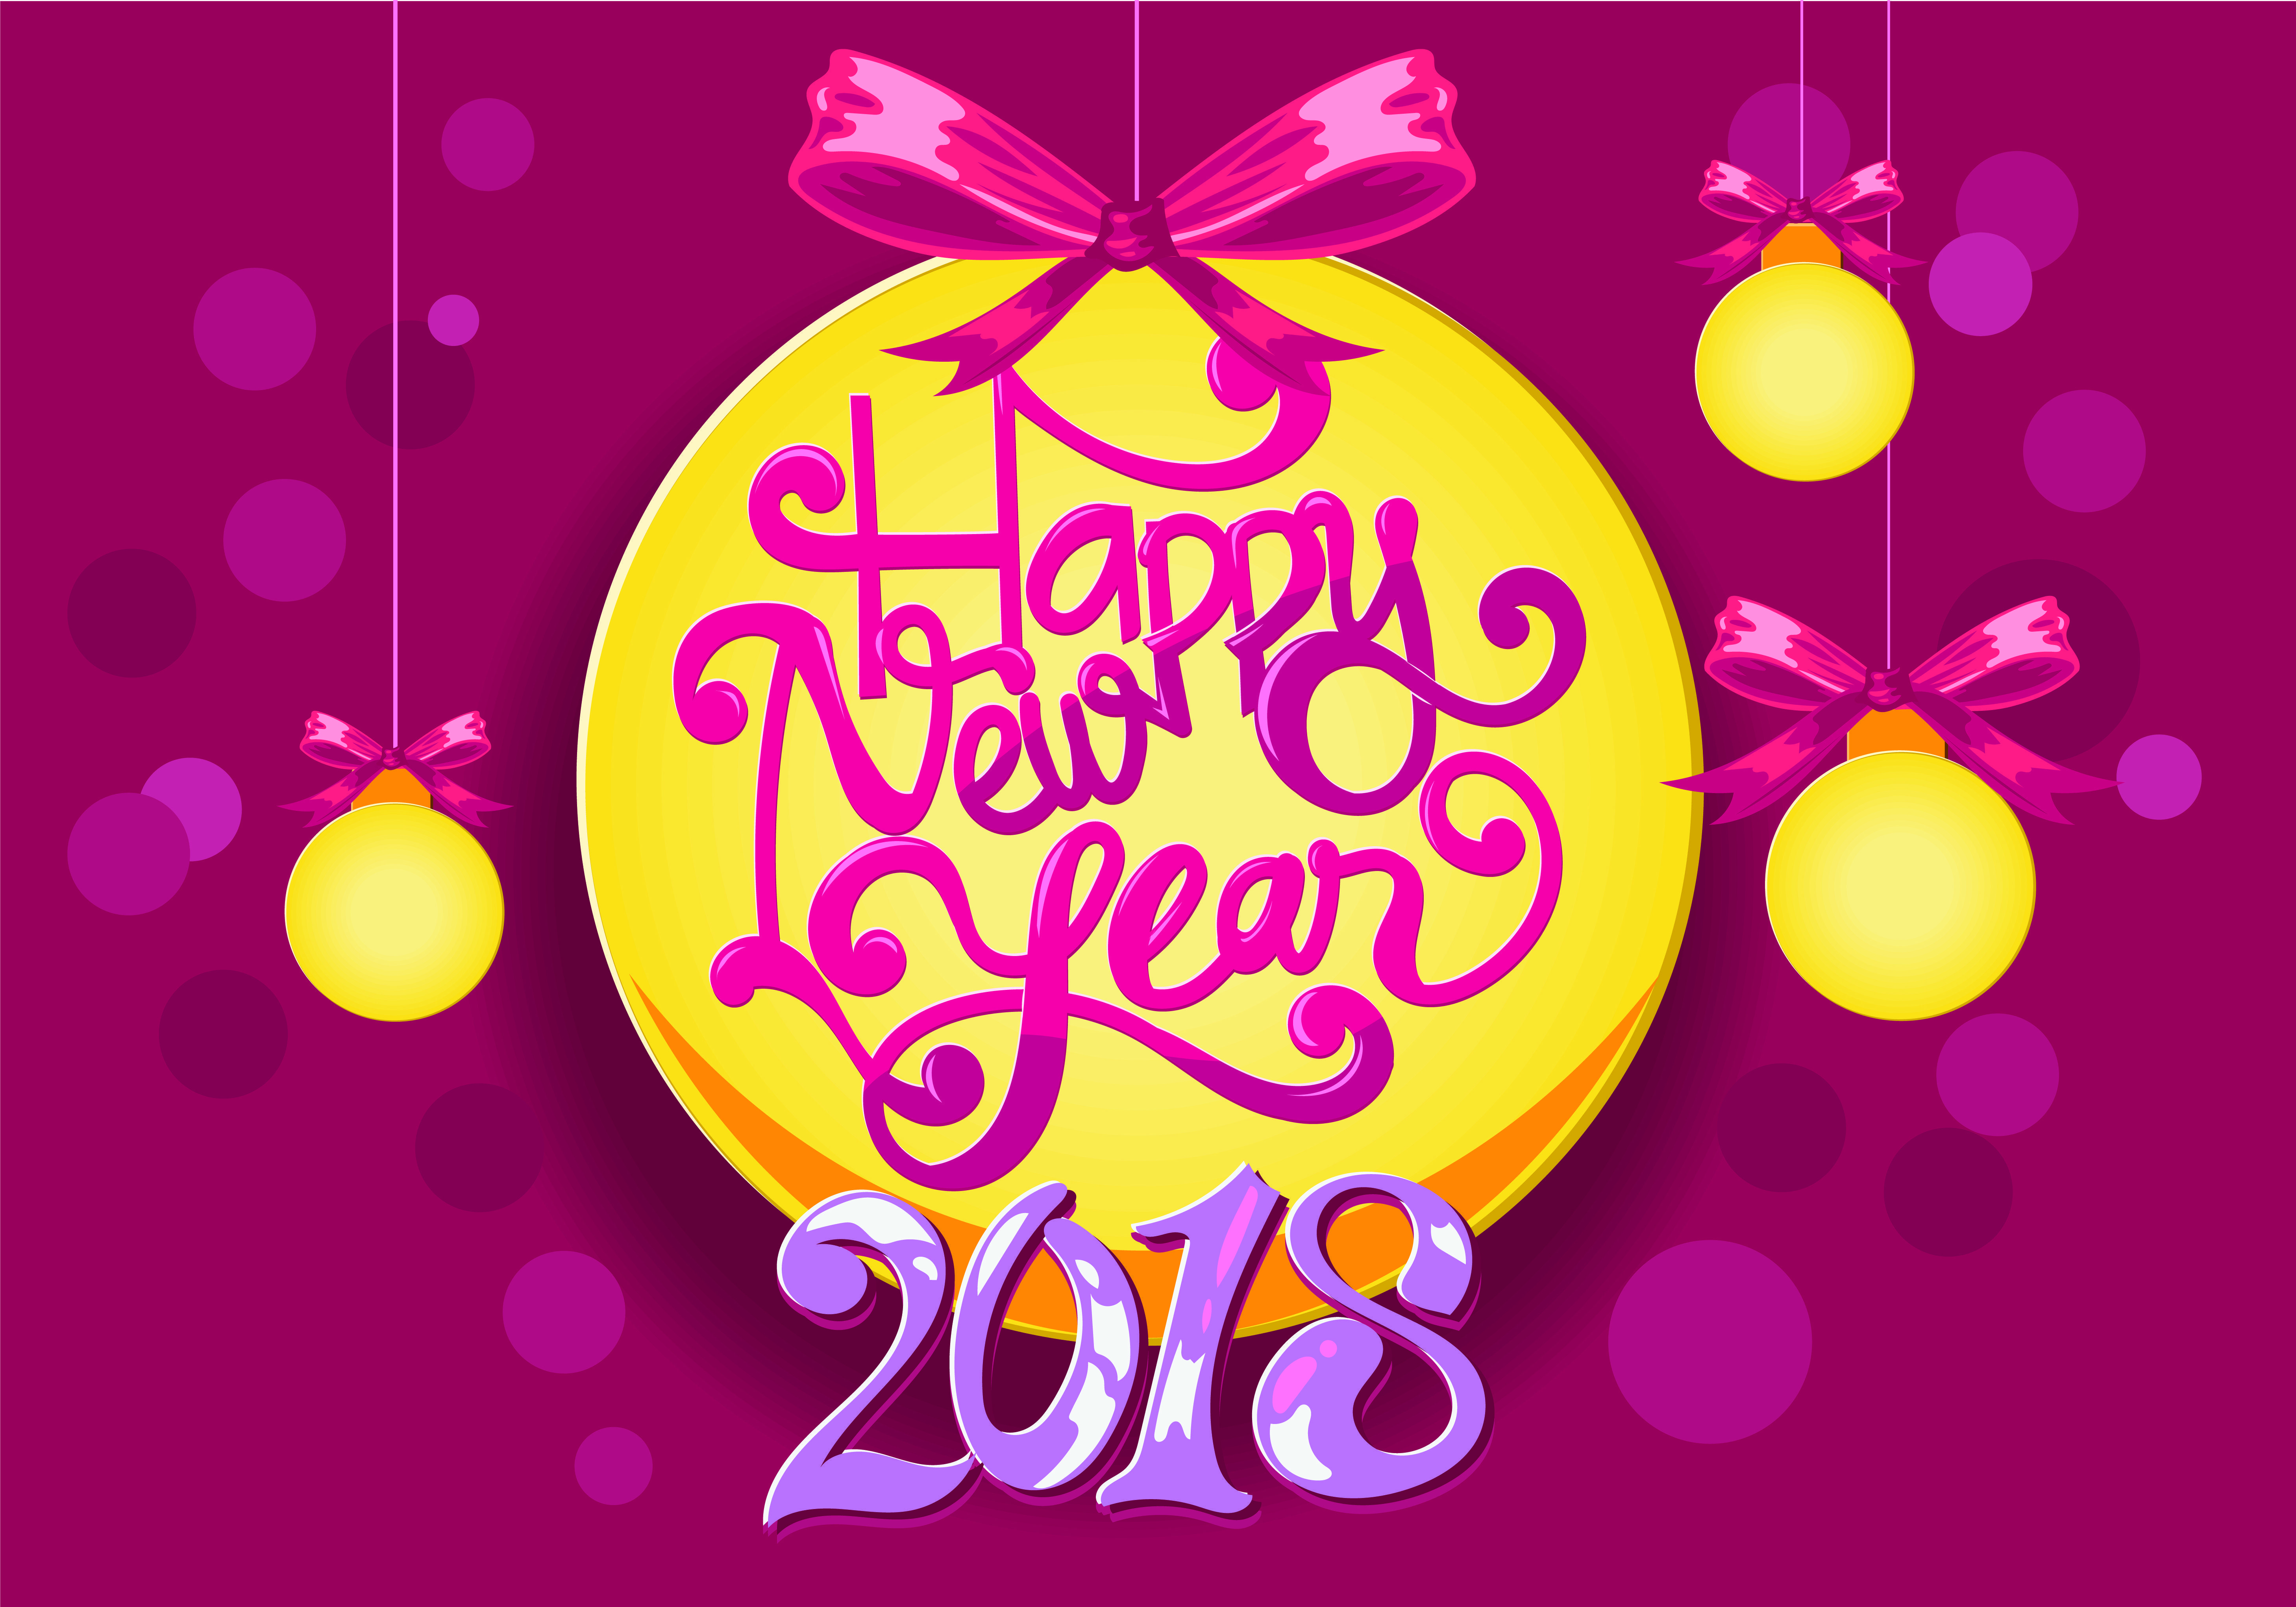 Welcome 2018 Bye Bye 2017 UHD 4K Wallpaper Download